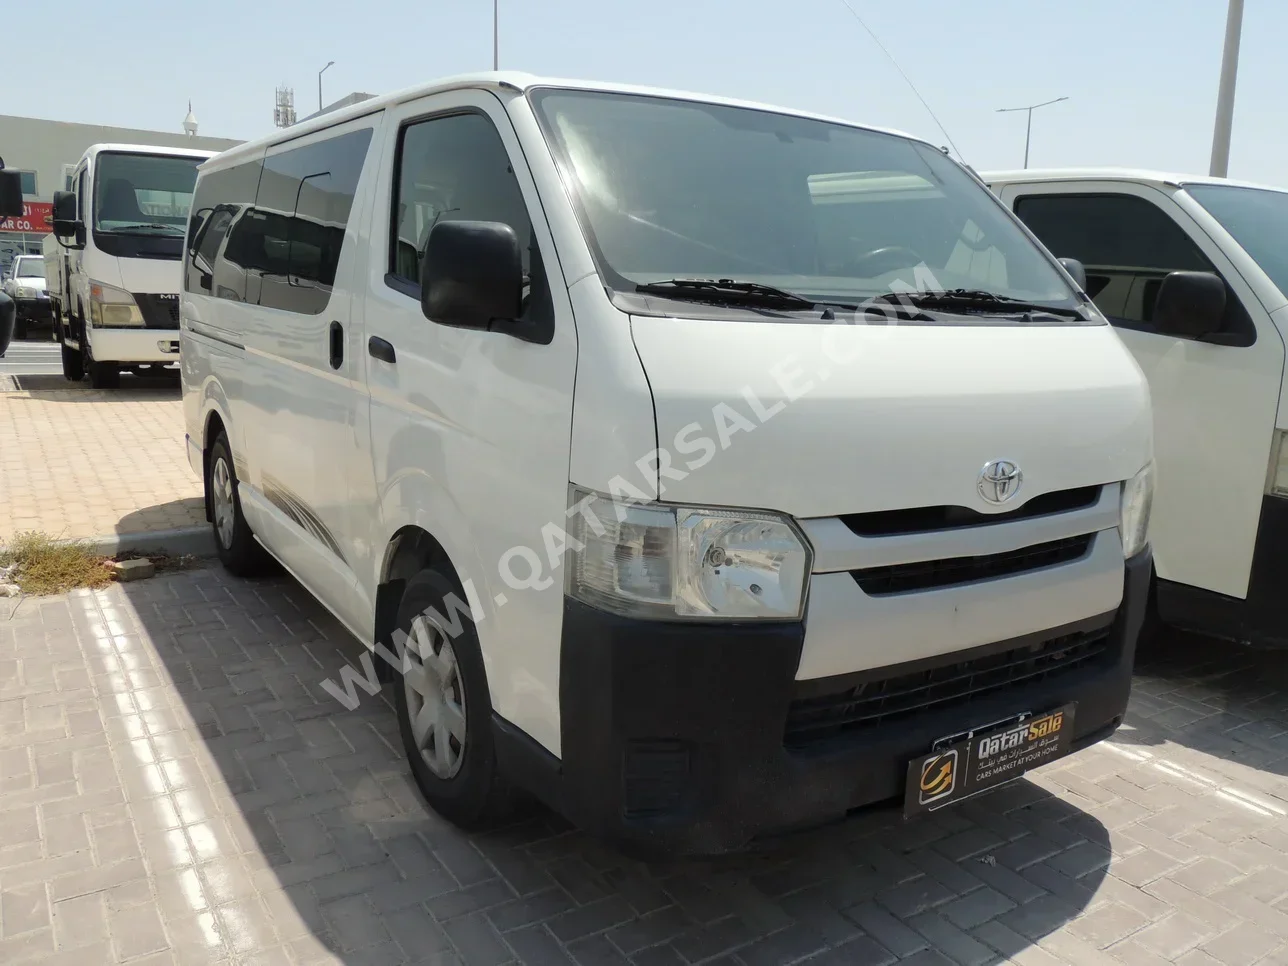 Toyota  Hiace  2015  Manual  221,000 Km  4 Cylinder  Rear Wheel Drive (RWD)  Van / Bus  White